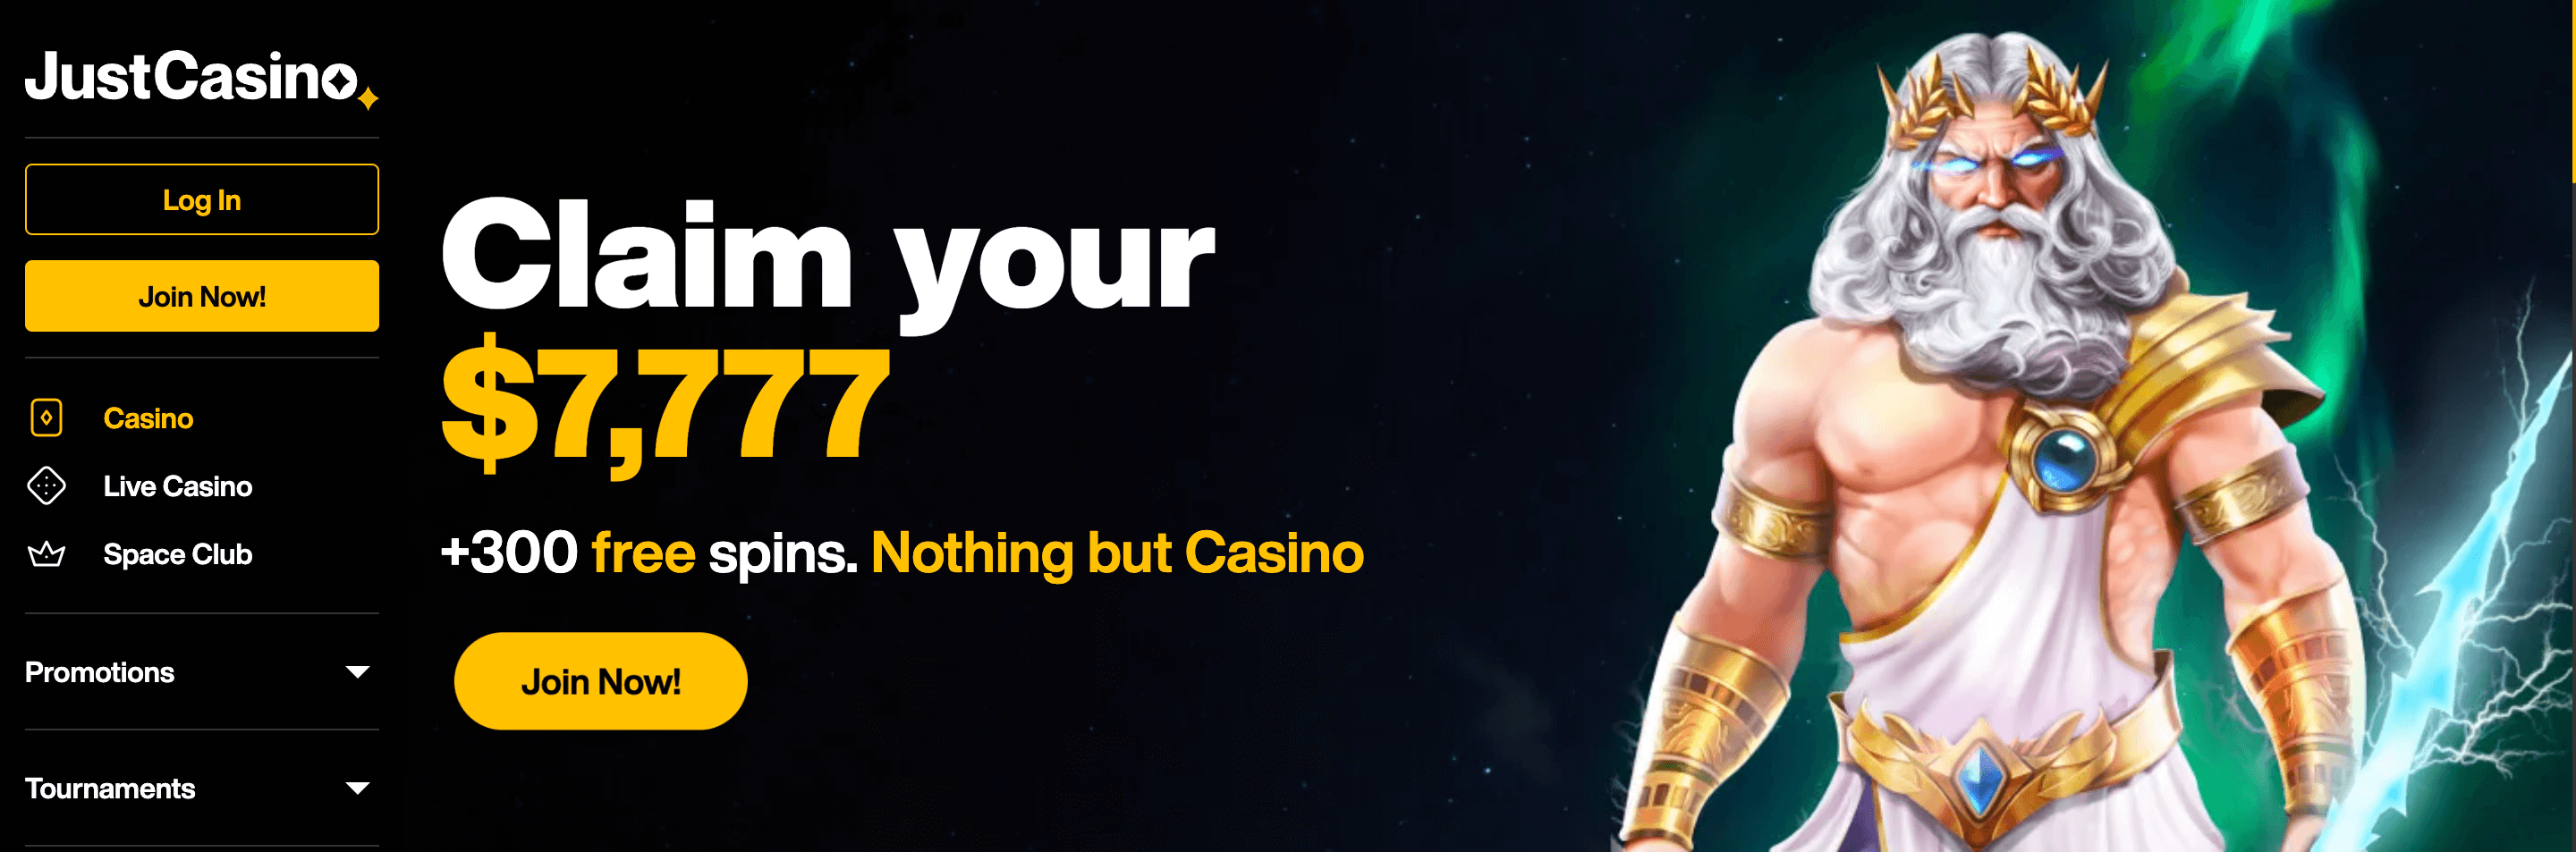 JustCasino Homepage  - Emirates Casino Review